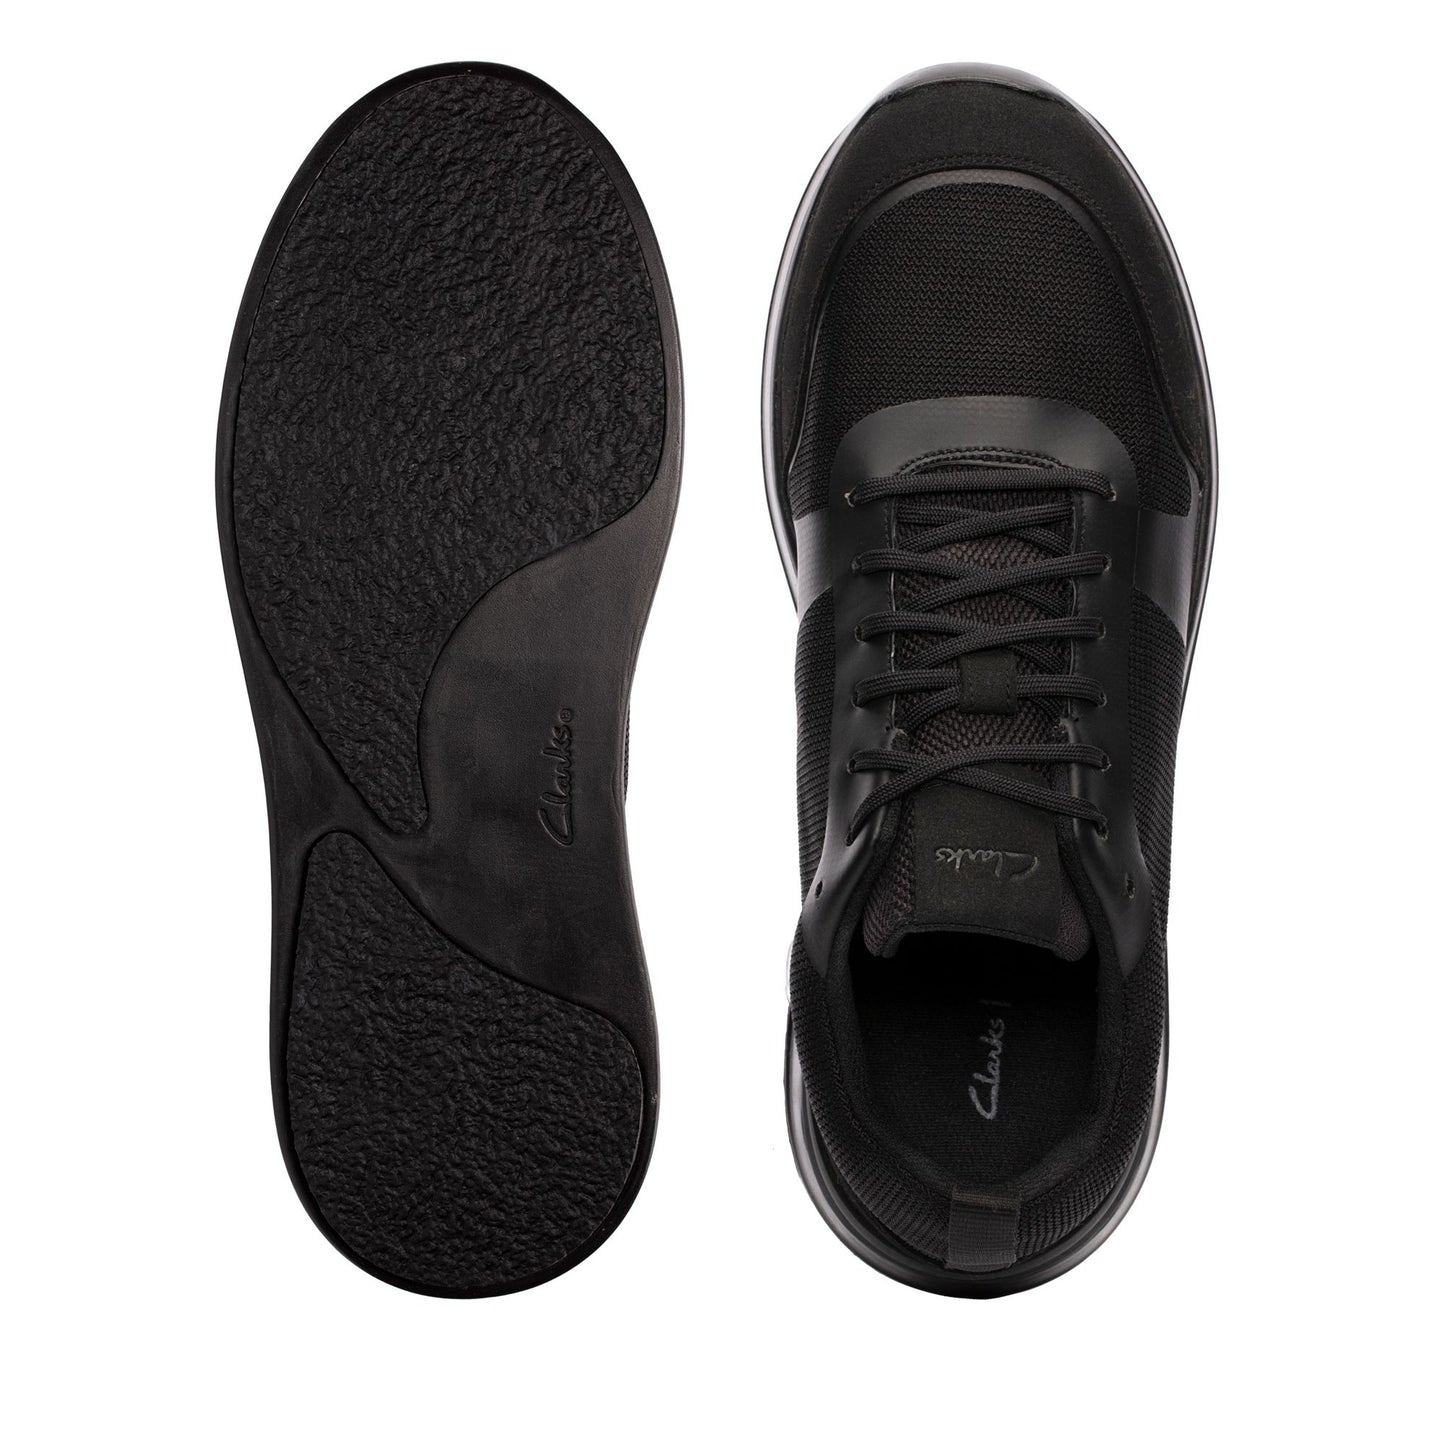 Sneakers De La Marca Clarks Para Hombre Modelo Lt Lace Black Knit Un En Color Negro